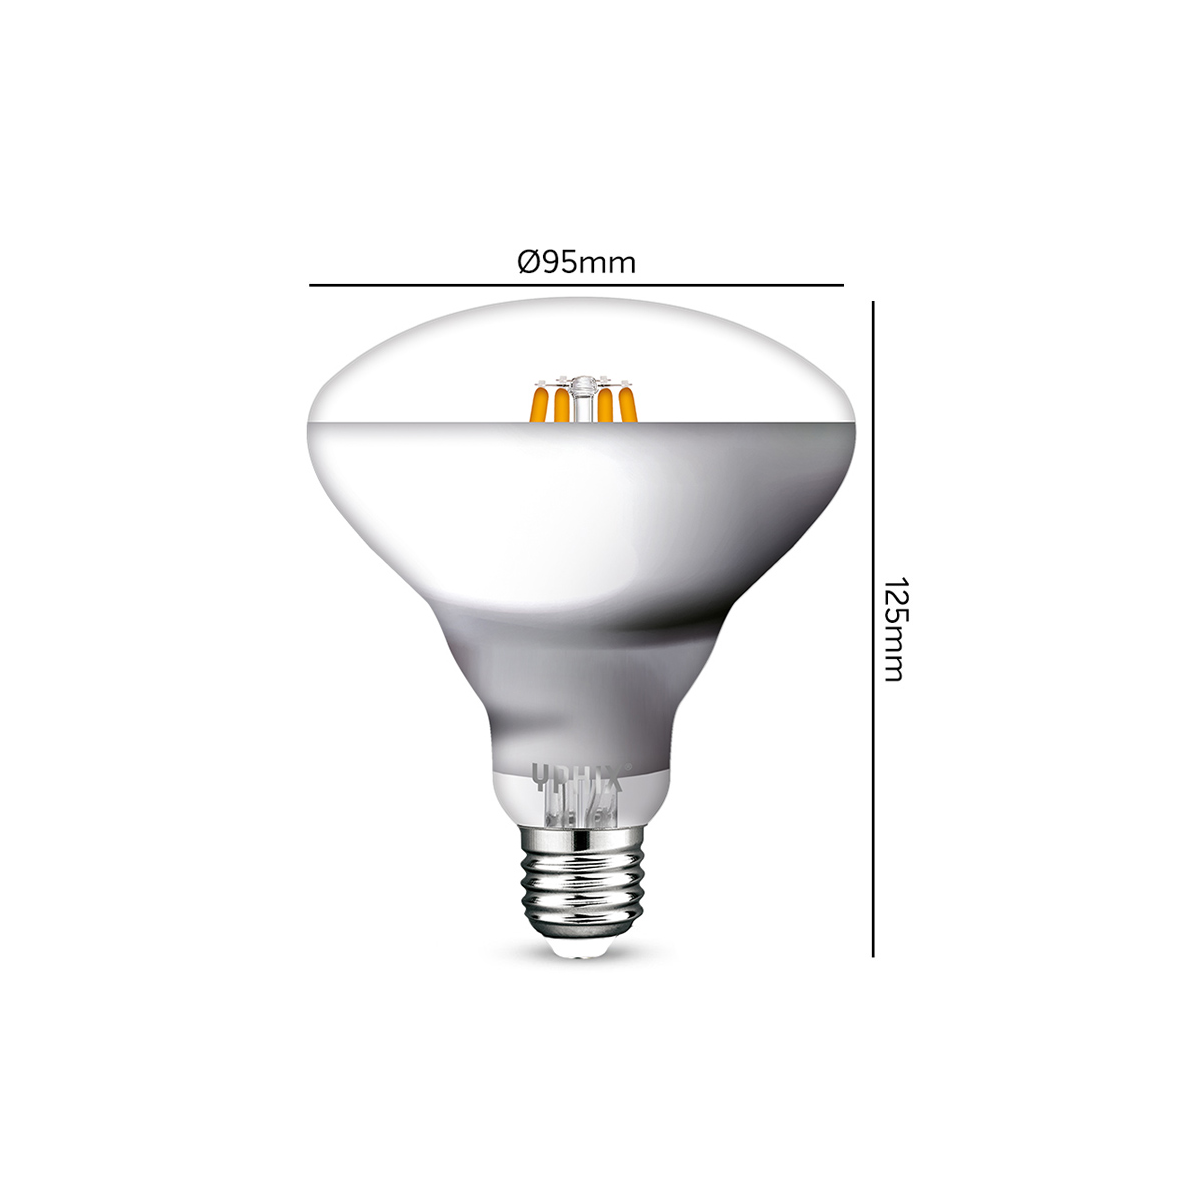 Acteur zaad passen Yphix E27 LED lamp Herculis 6.5 Watt BR30 dimmable (Replaces 35W) | ESTG